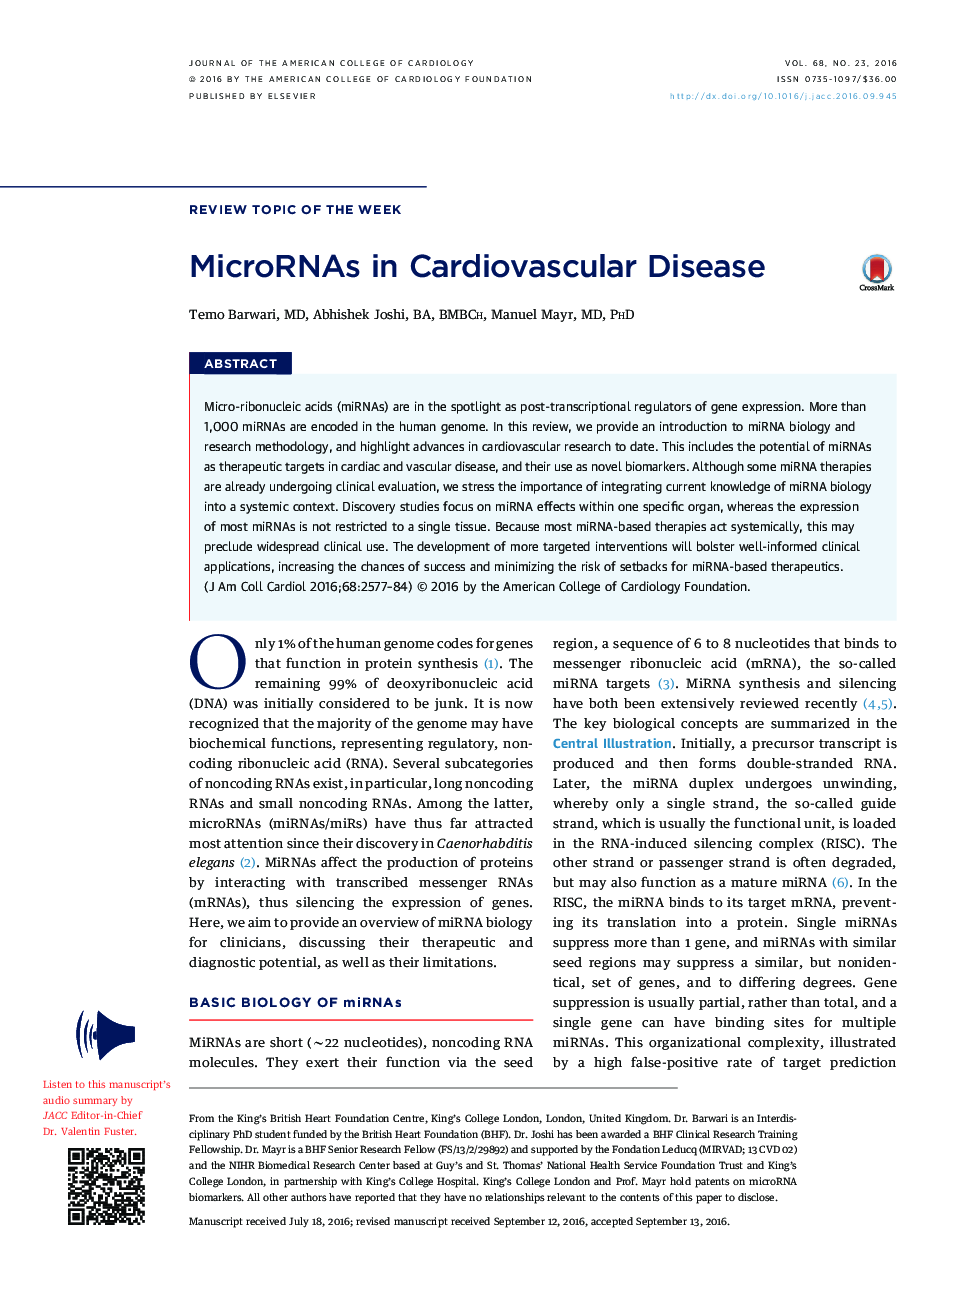 MicroRNAs in Cardiovascular Disease